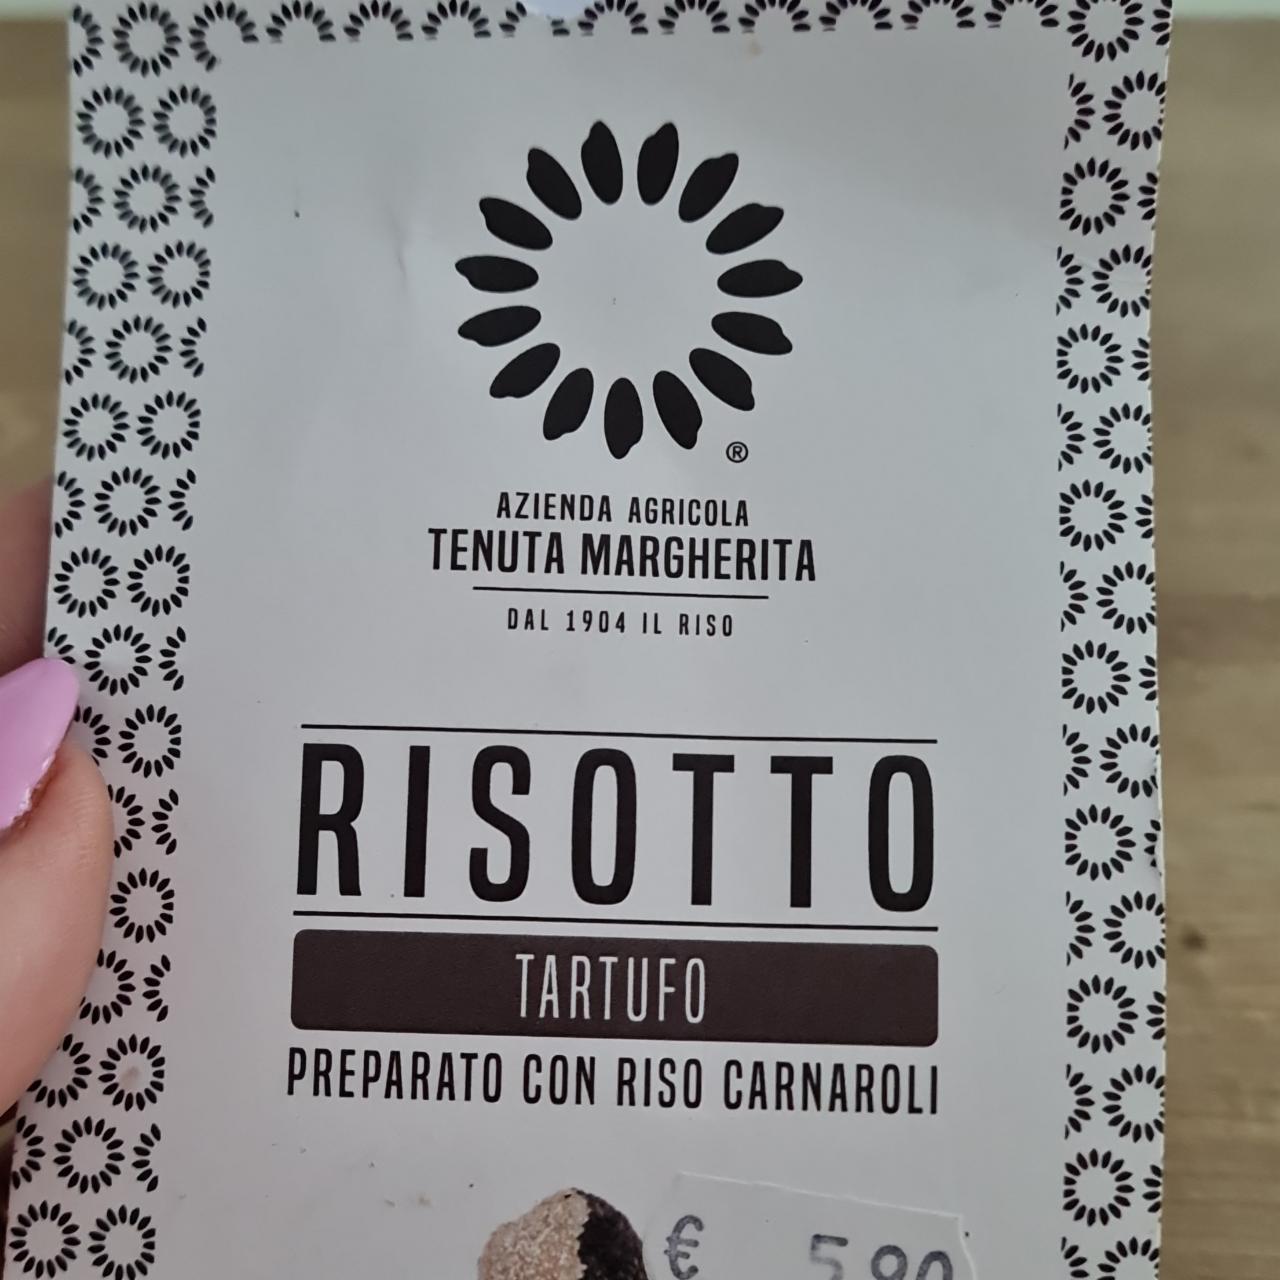 Fotografie - Risotto tartufo Tenuta Margherita